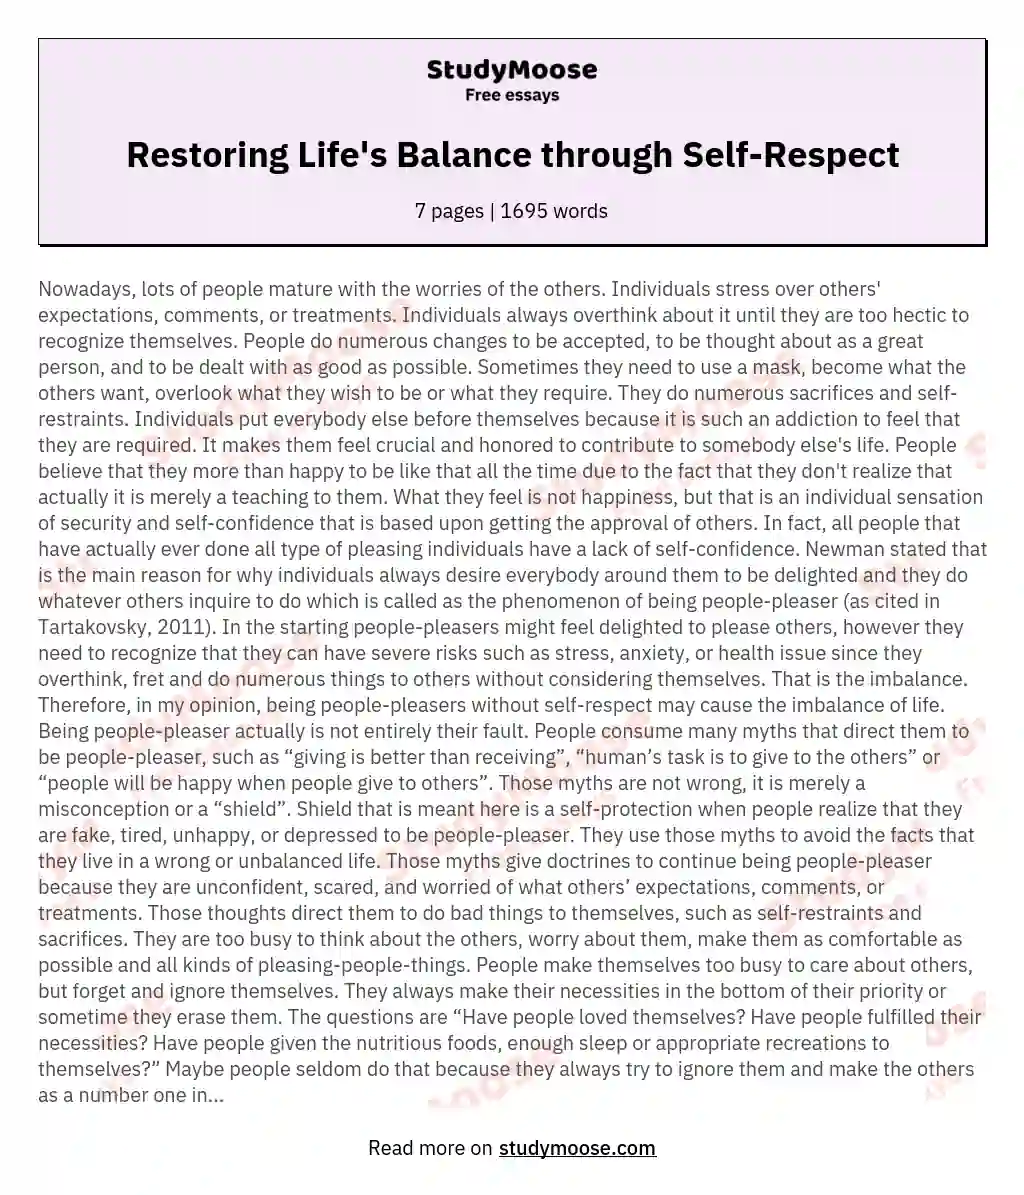 an essay on self respect